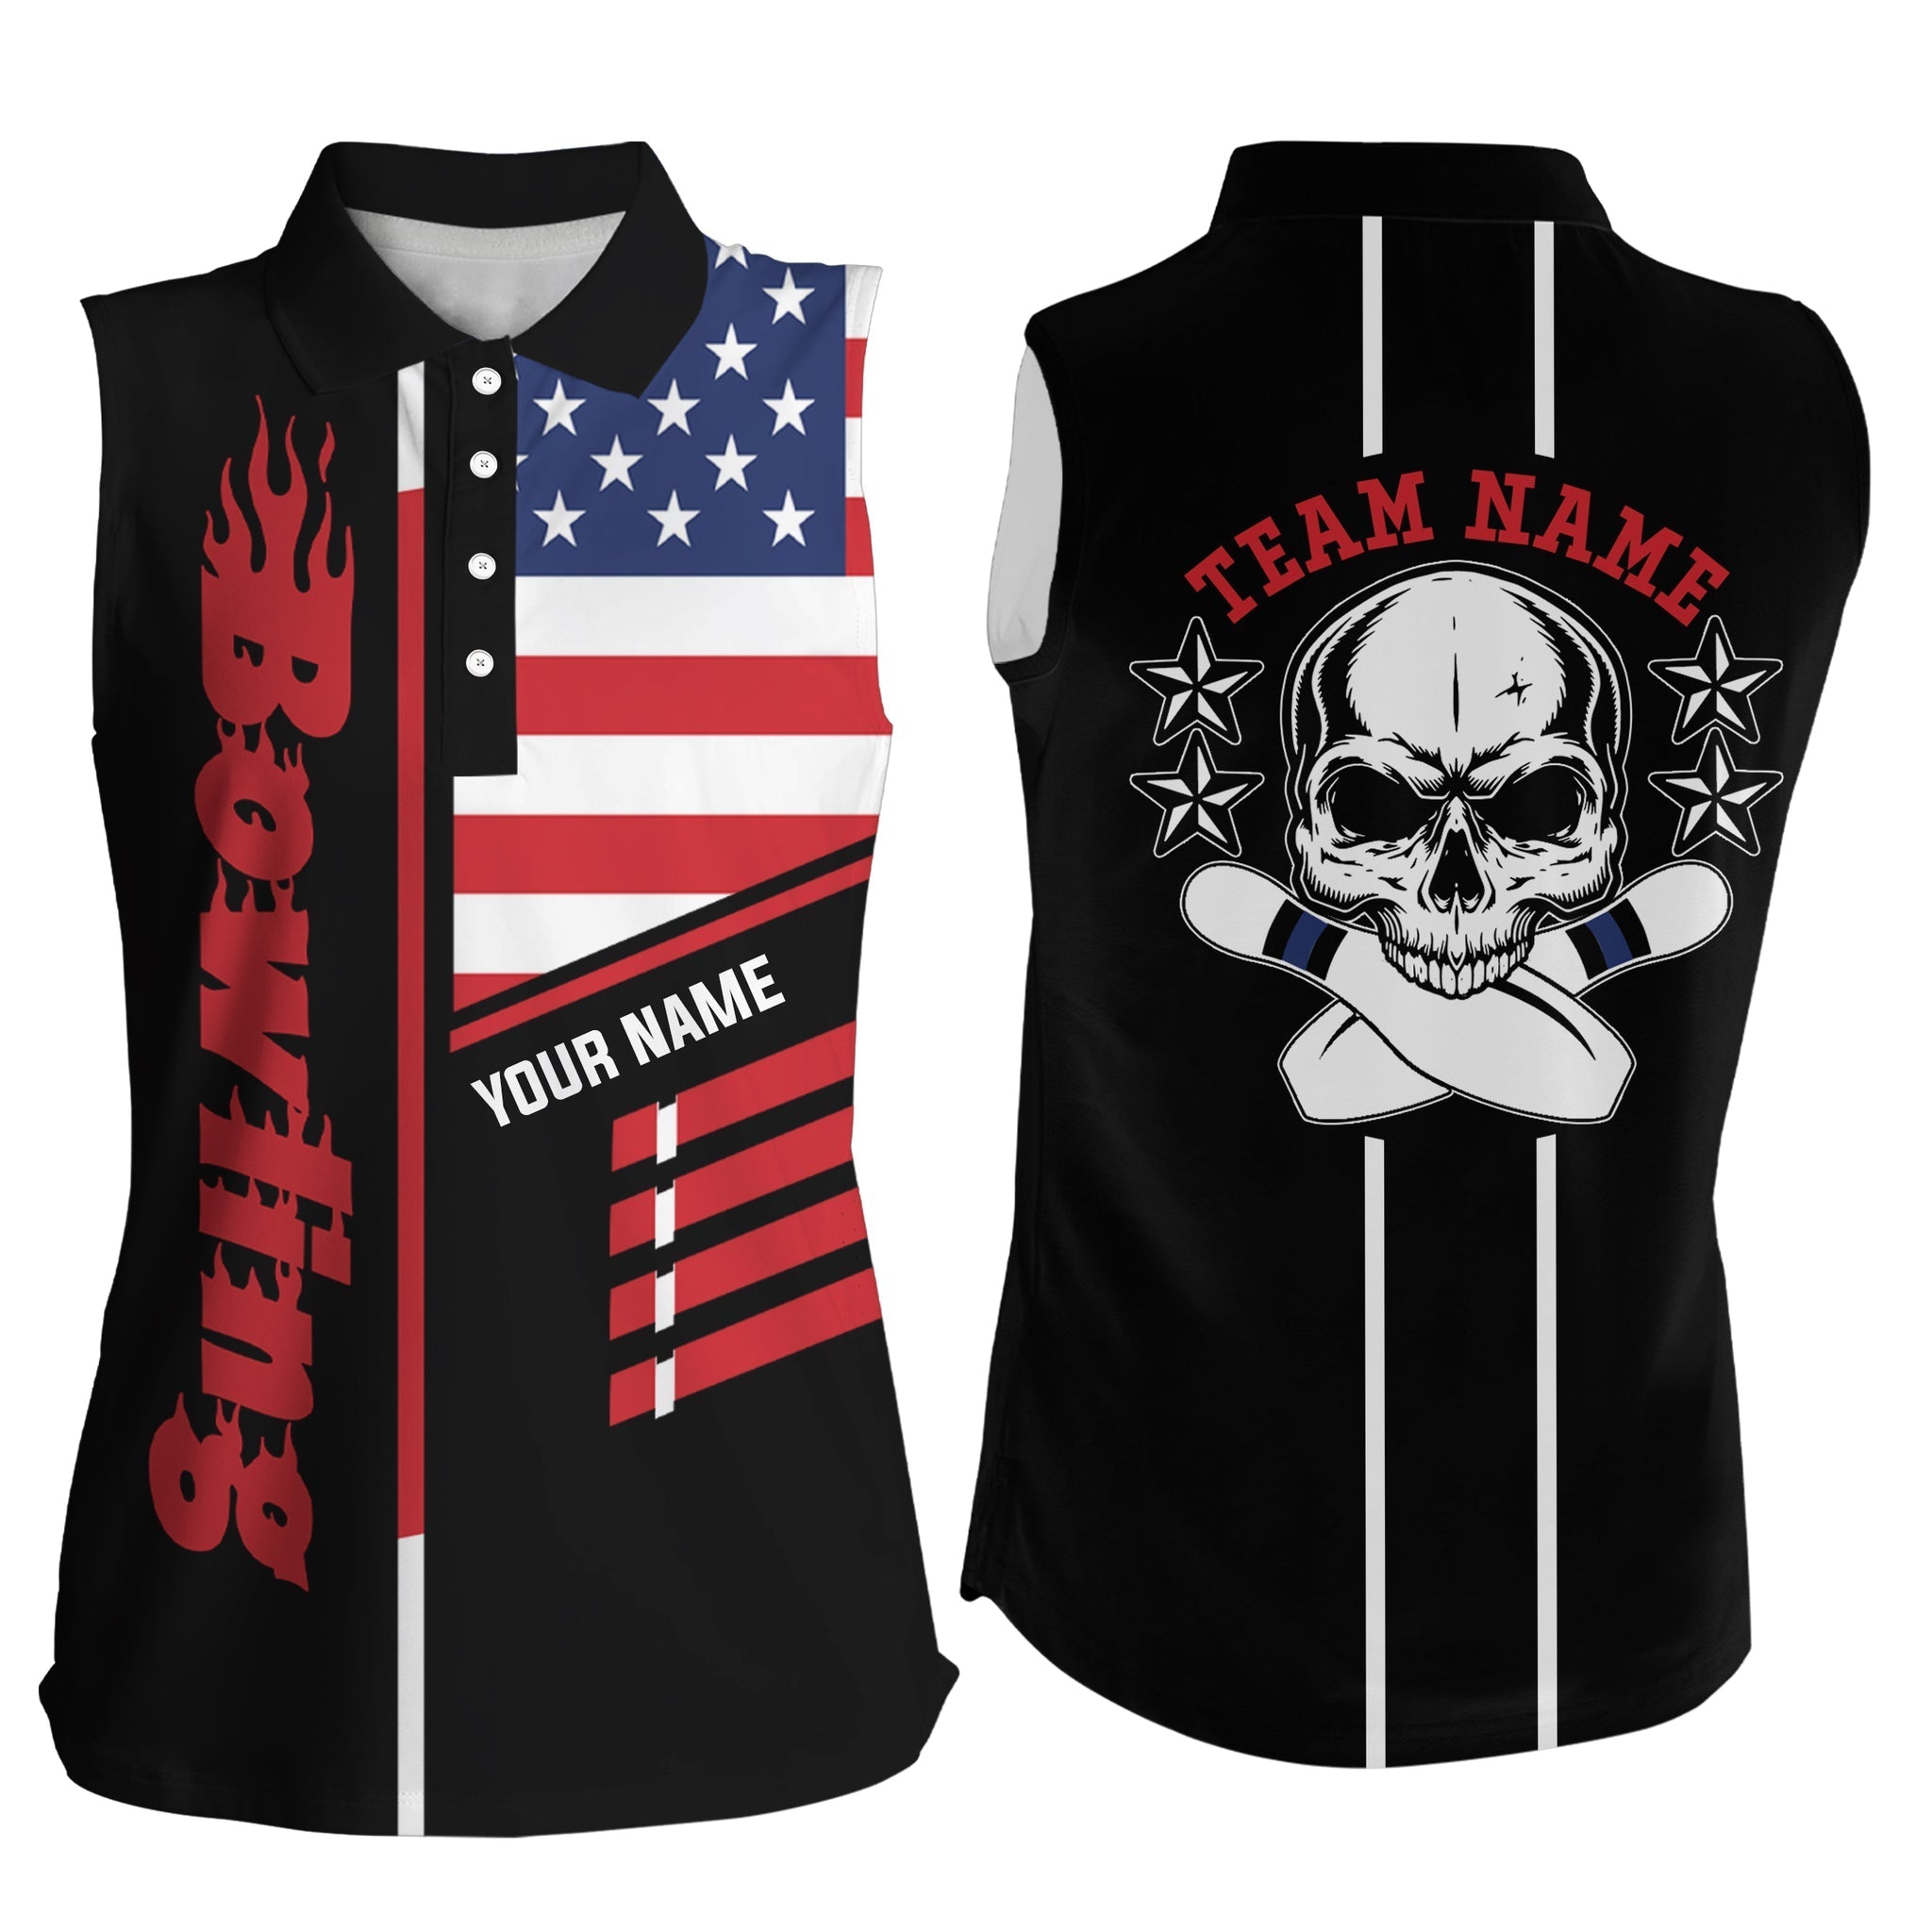 Bowling sleeveless polo Shirt/ Women Bowling Jersey/ Personalized American flag skull Bowling Team Shirt